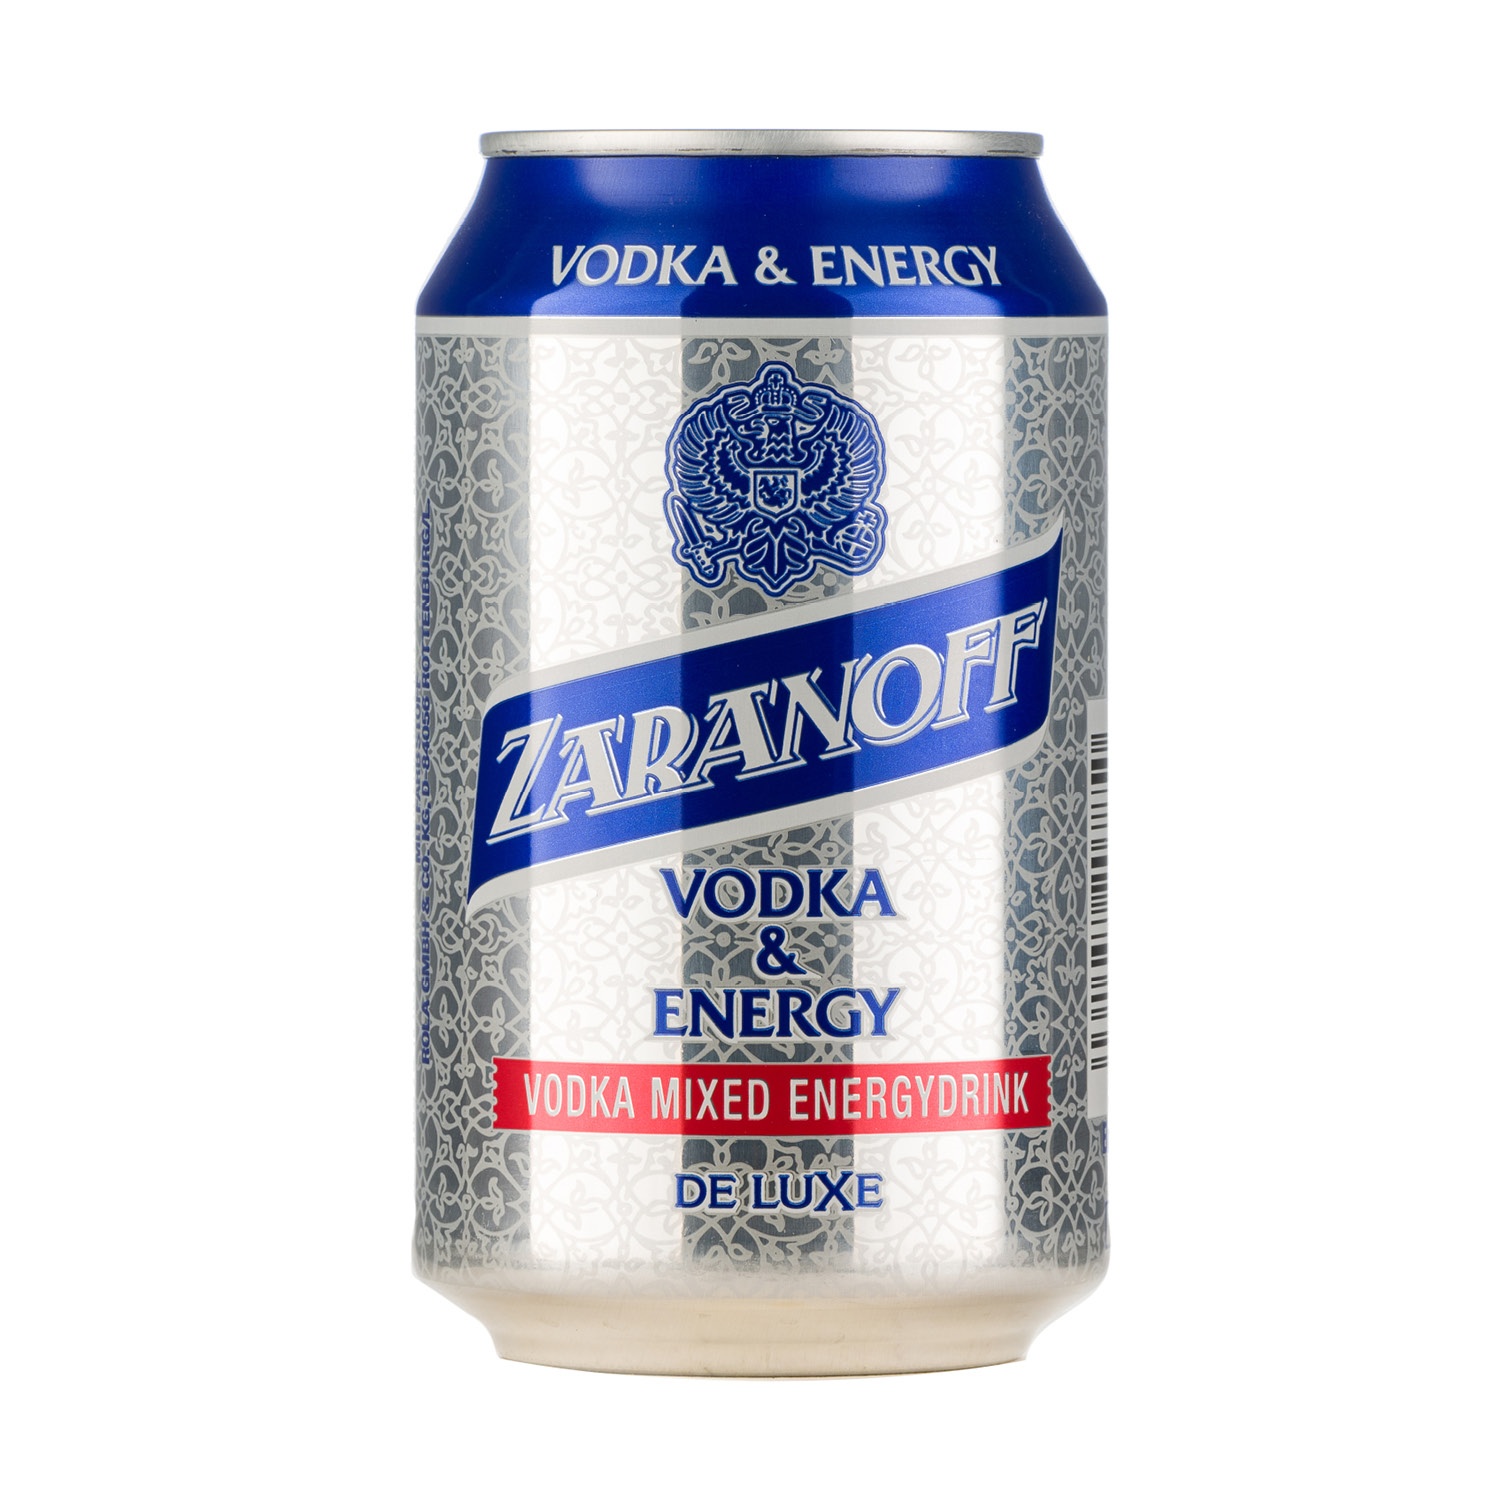 ZARANOFF Vodka & Energy 0,33 l